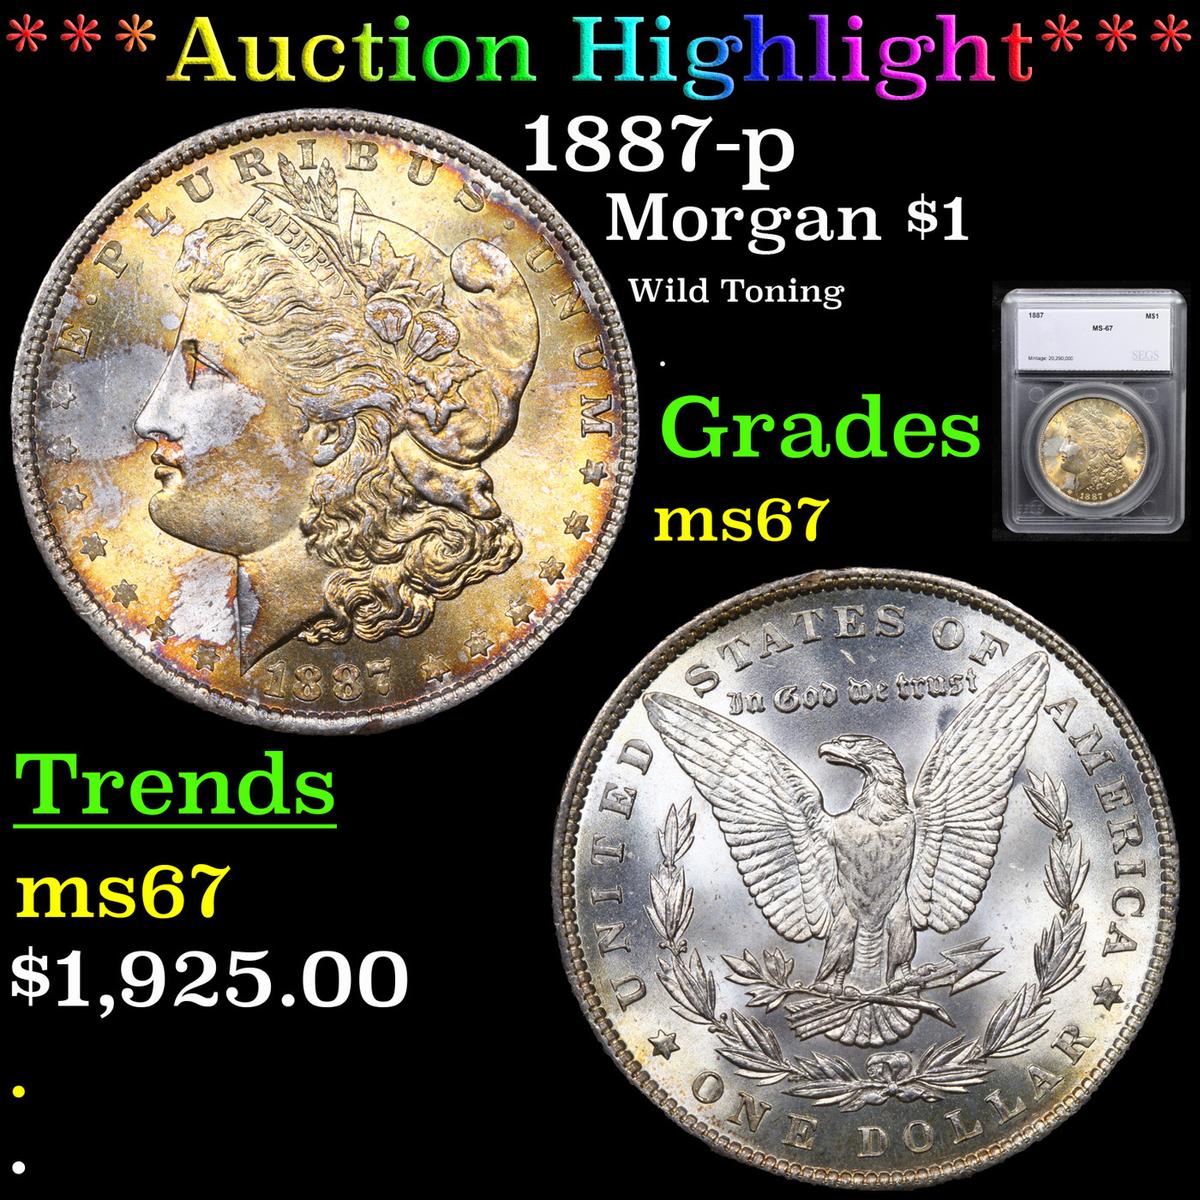 ***Auction Highlight*** 1887-p Morgan Dollar $1 Graded ms67 By SEGS (fc)